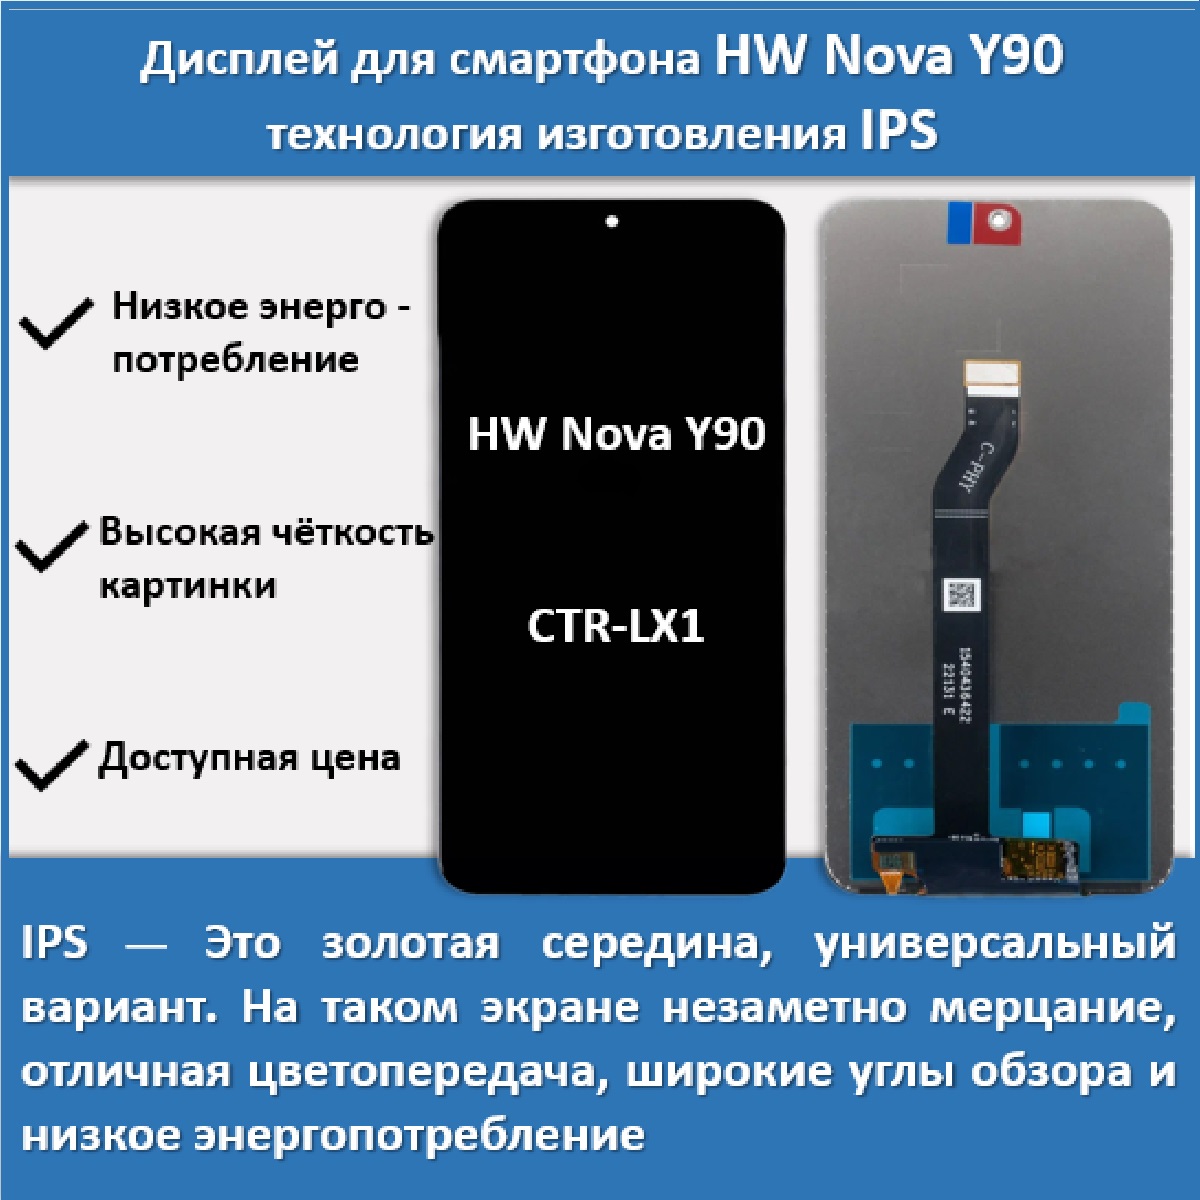 Дисплей для смартфона Huawei Nova Y90 (CTR-LX1), технология IPS